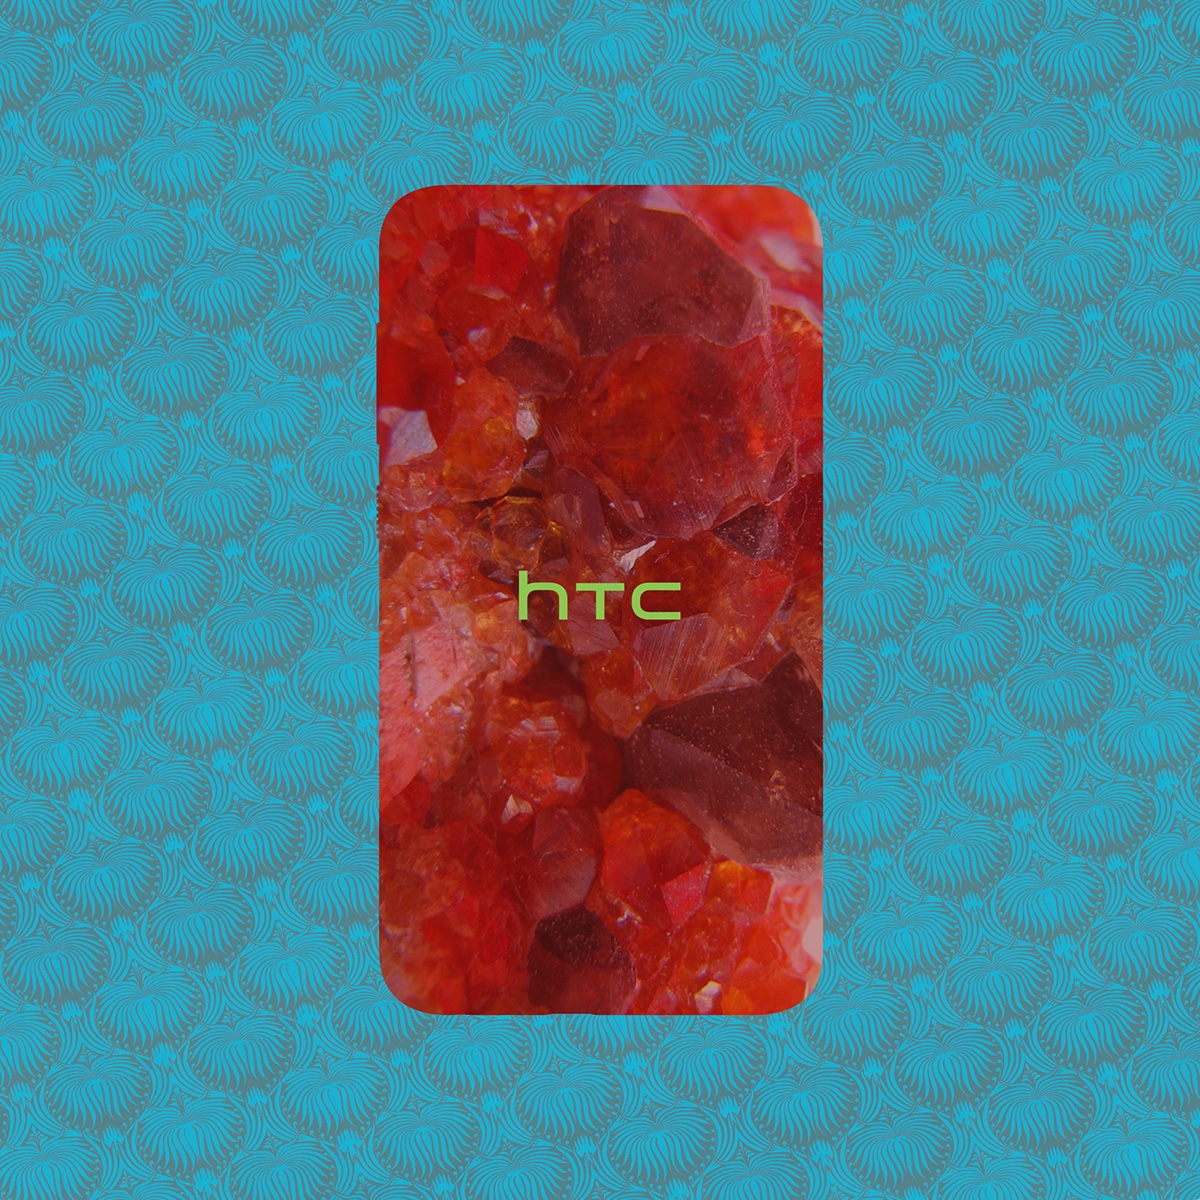 Adobe Portfolio htc HTC One A9 aero mobile phone android Technology